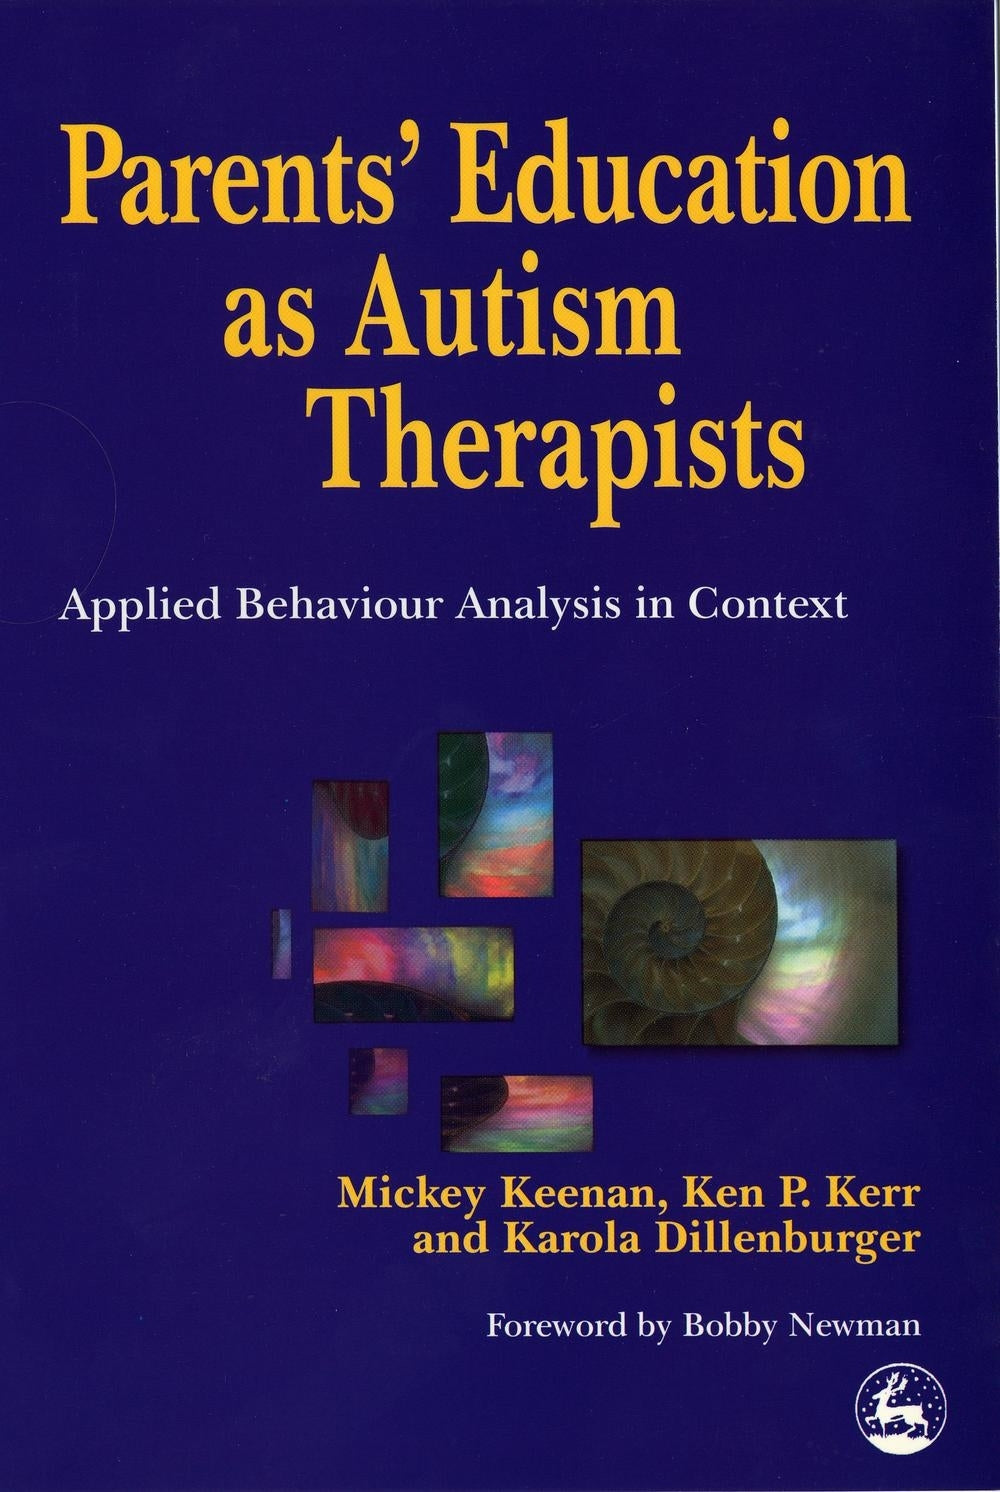 Parents' Education as Autism Therapists by Mickey Keenan, Ken P. Kerr, Karola Dillenburger